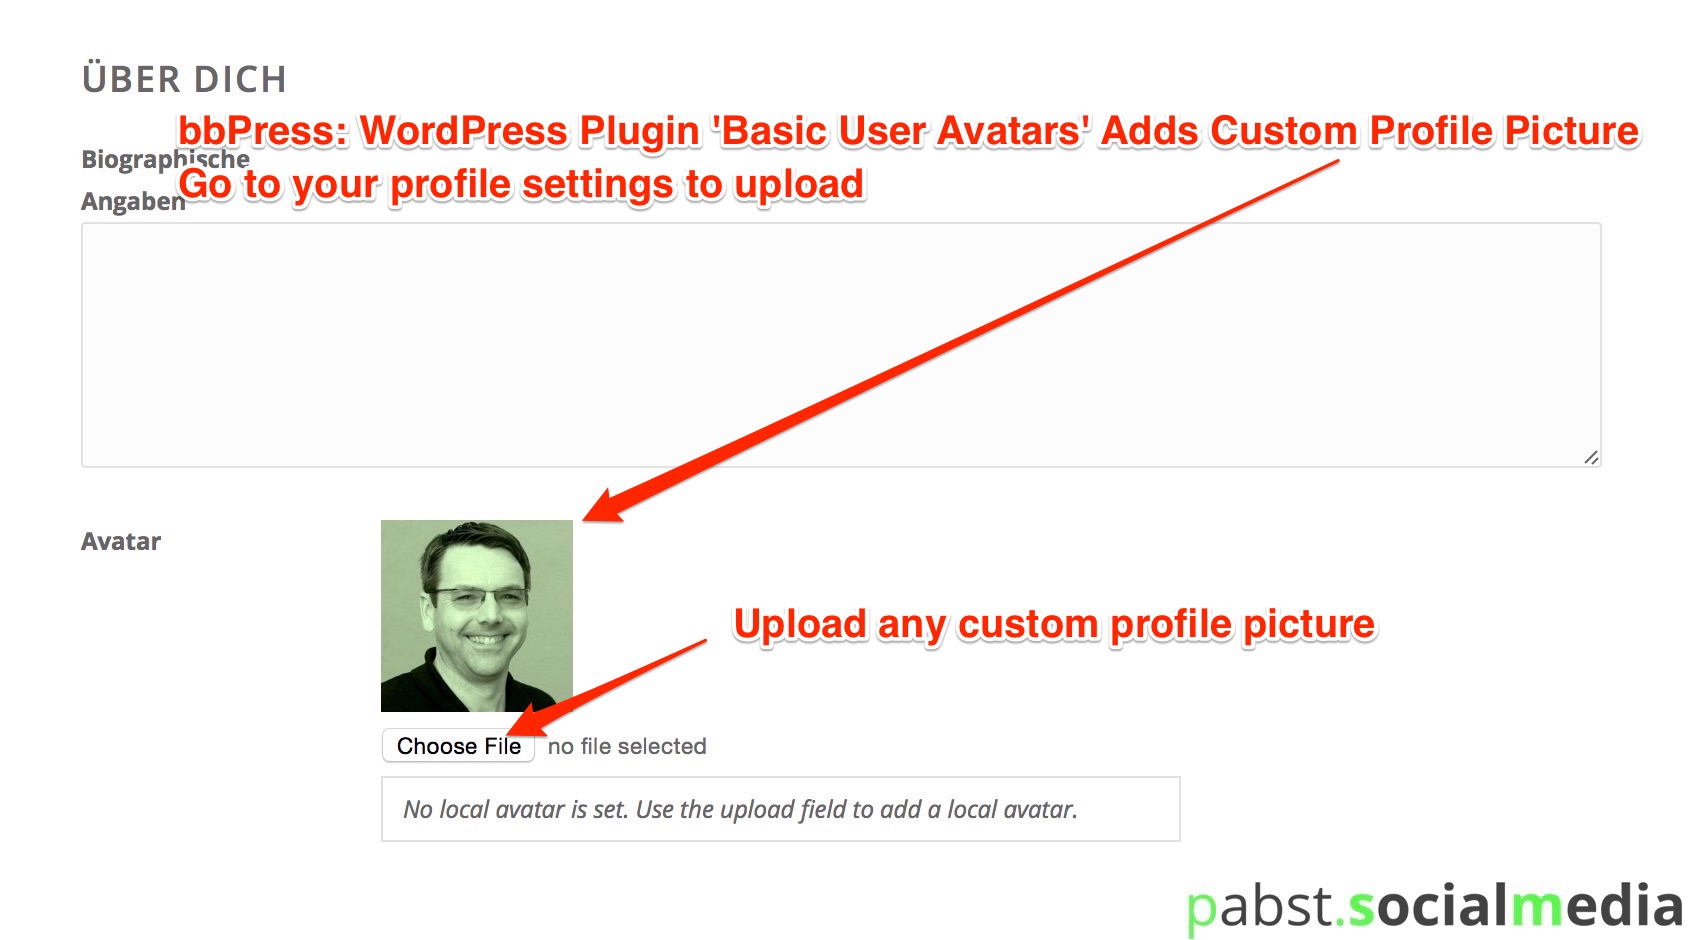 bbPress WordPress Plugin Basic User Avatars Adds Custom Profile Picture